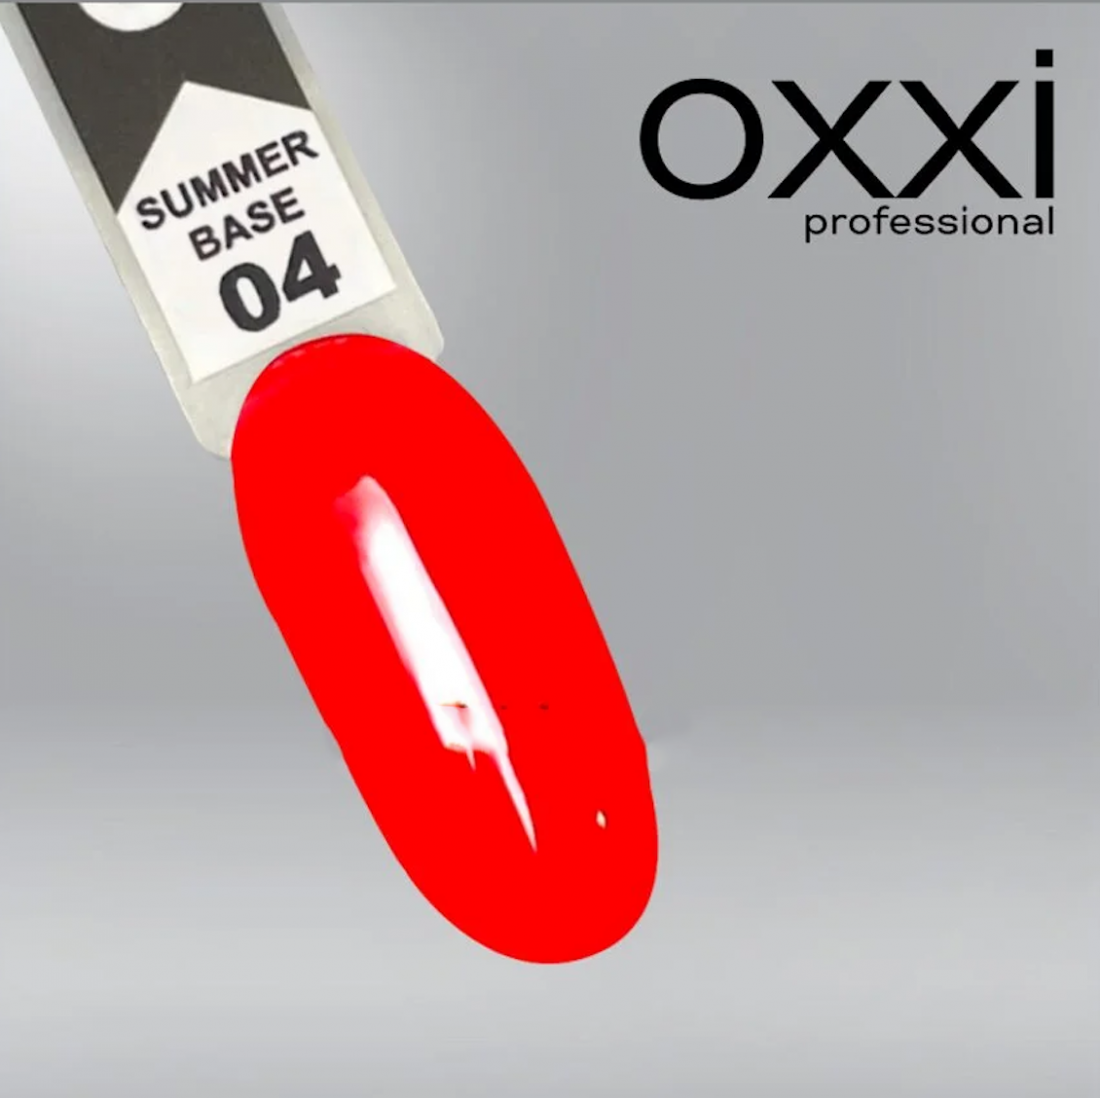 Камуфлирующая цветная база для гель-лака Oxxi Professional Summer Base 4, ярко-красная, 10мл